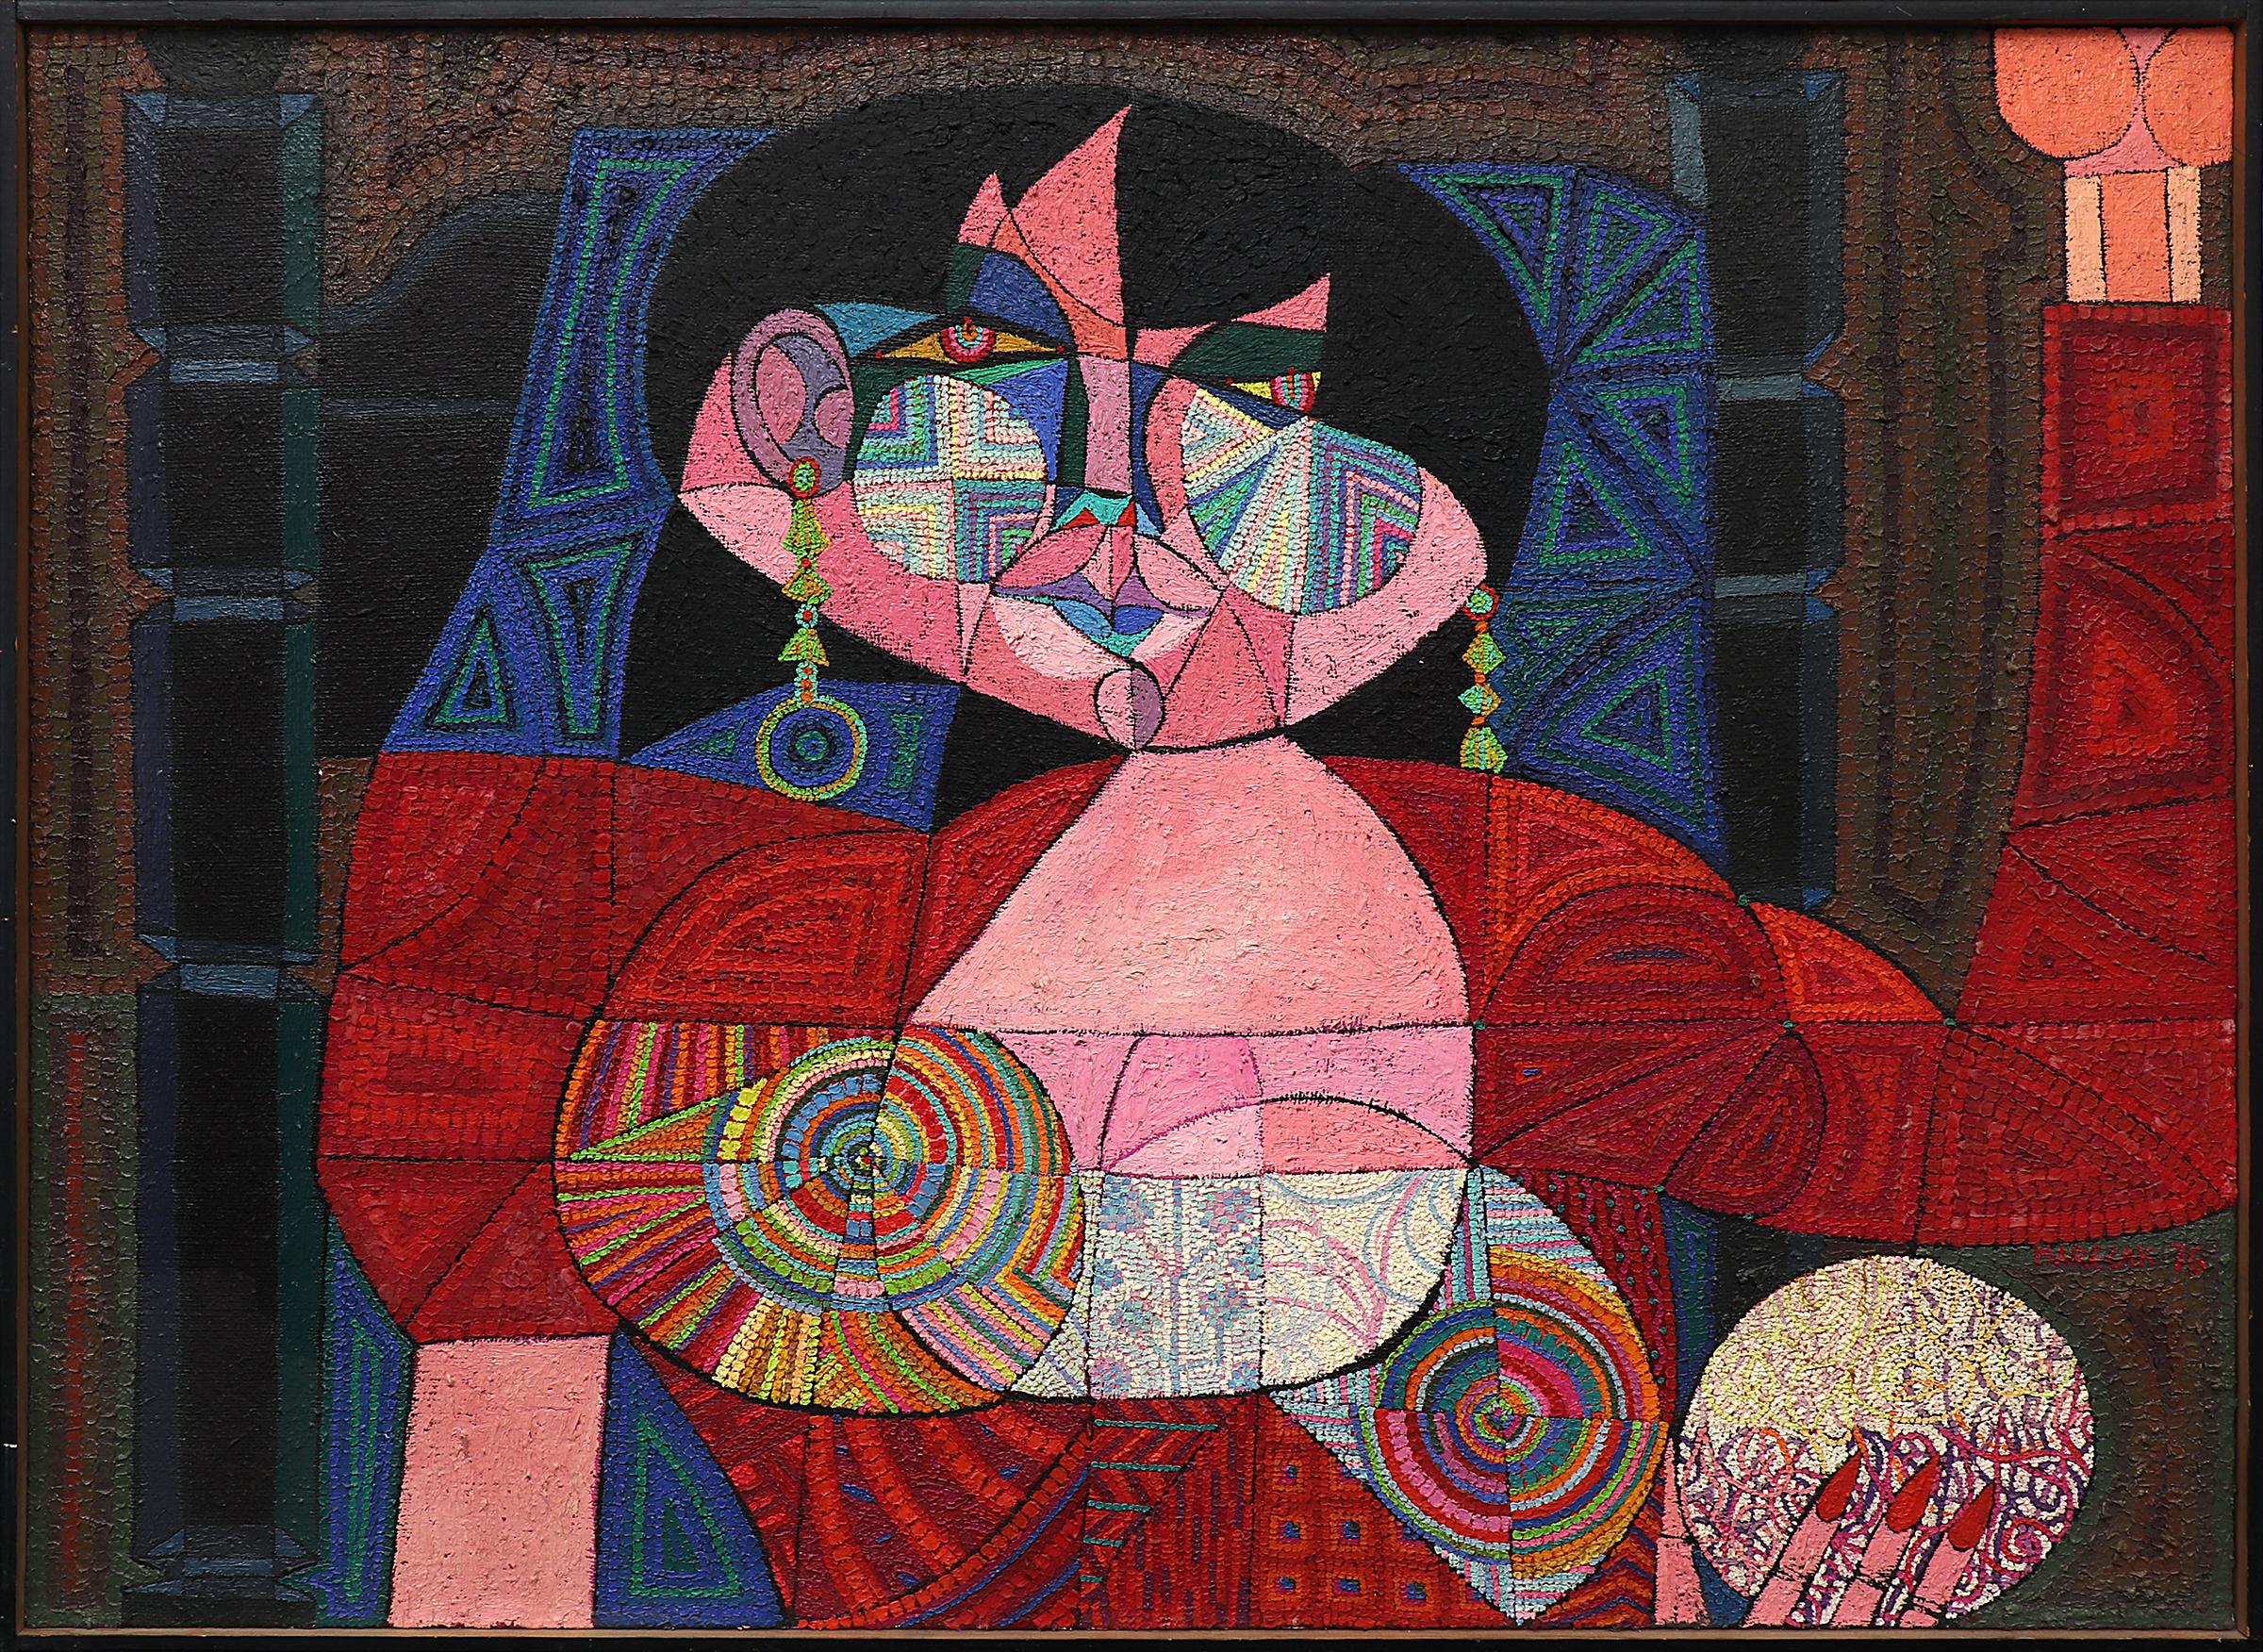 Edward Marecak Abstract Painting – Abstraktes figuratives Ölgemälde Sybil (Die Göttin), 1970er Jahre, Rosa, Blau, Rot